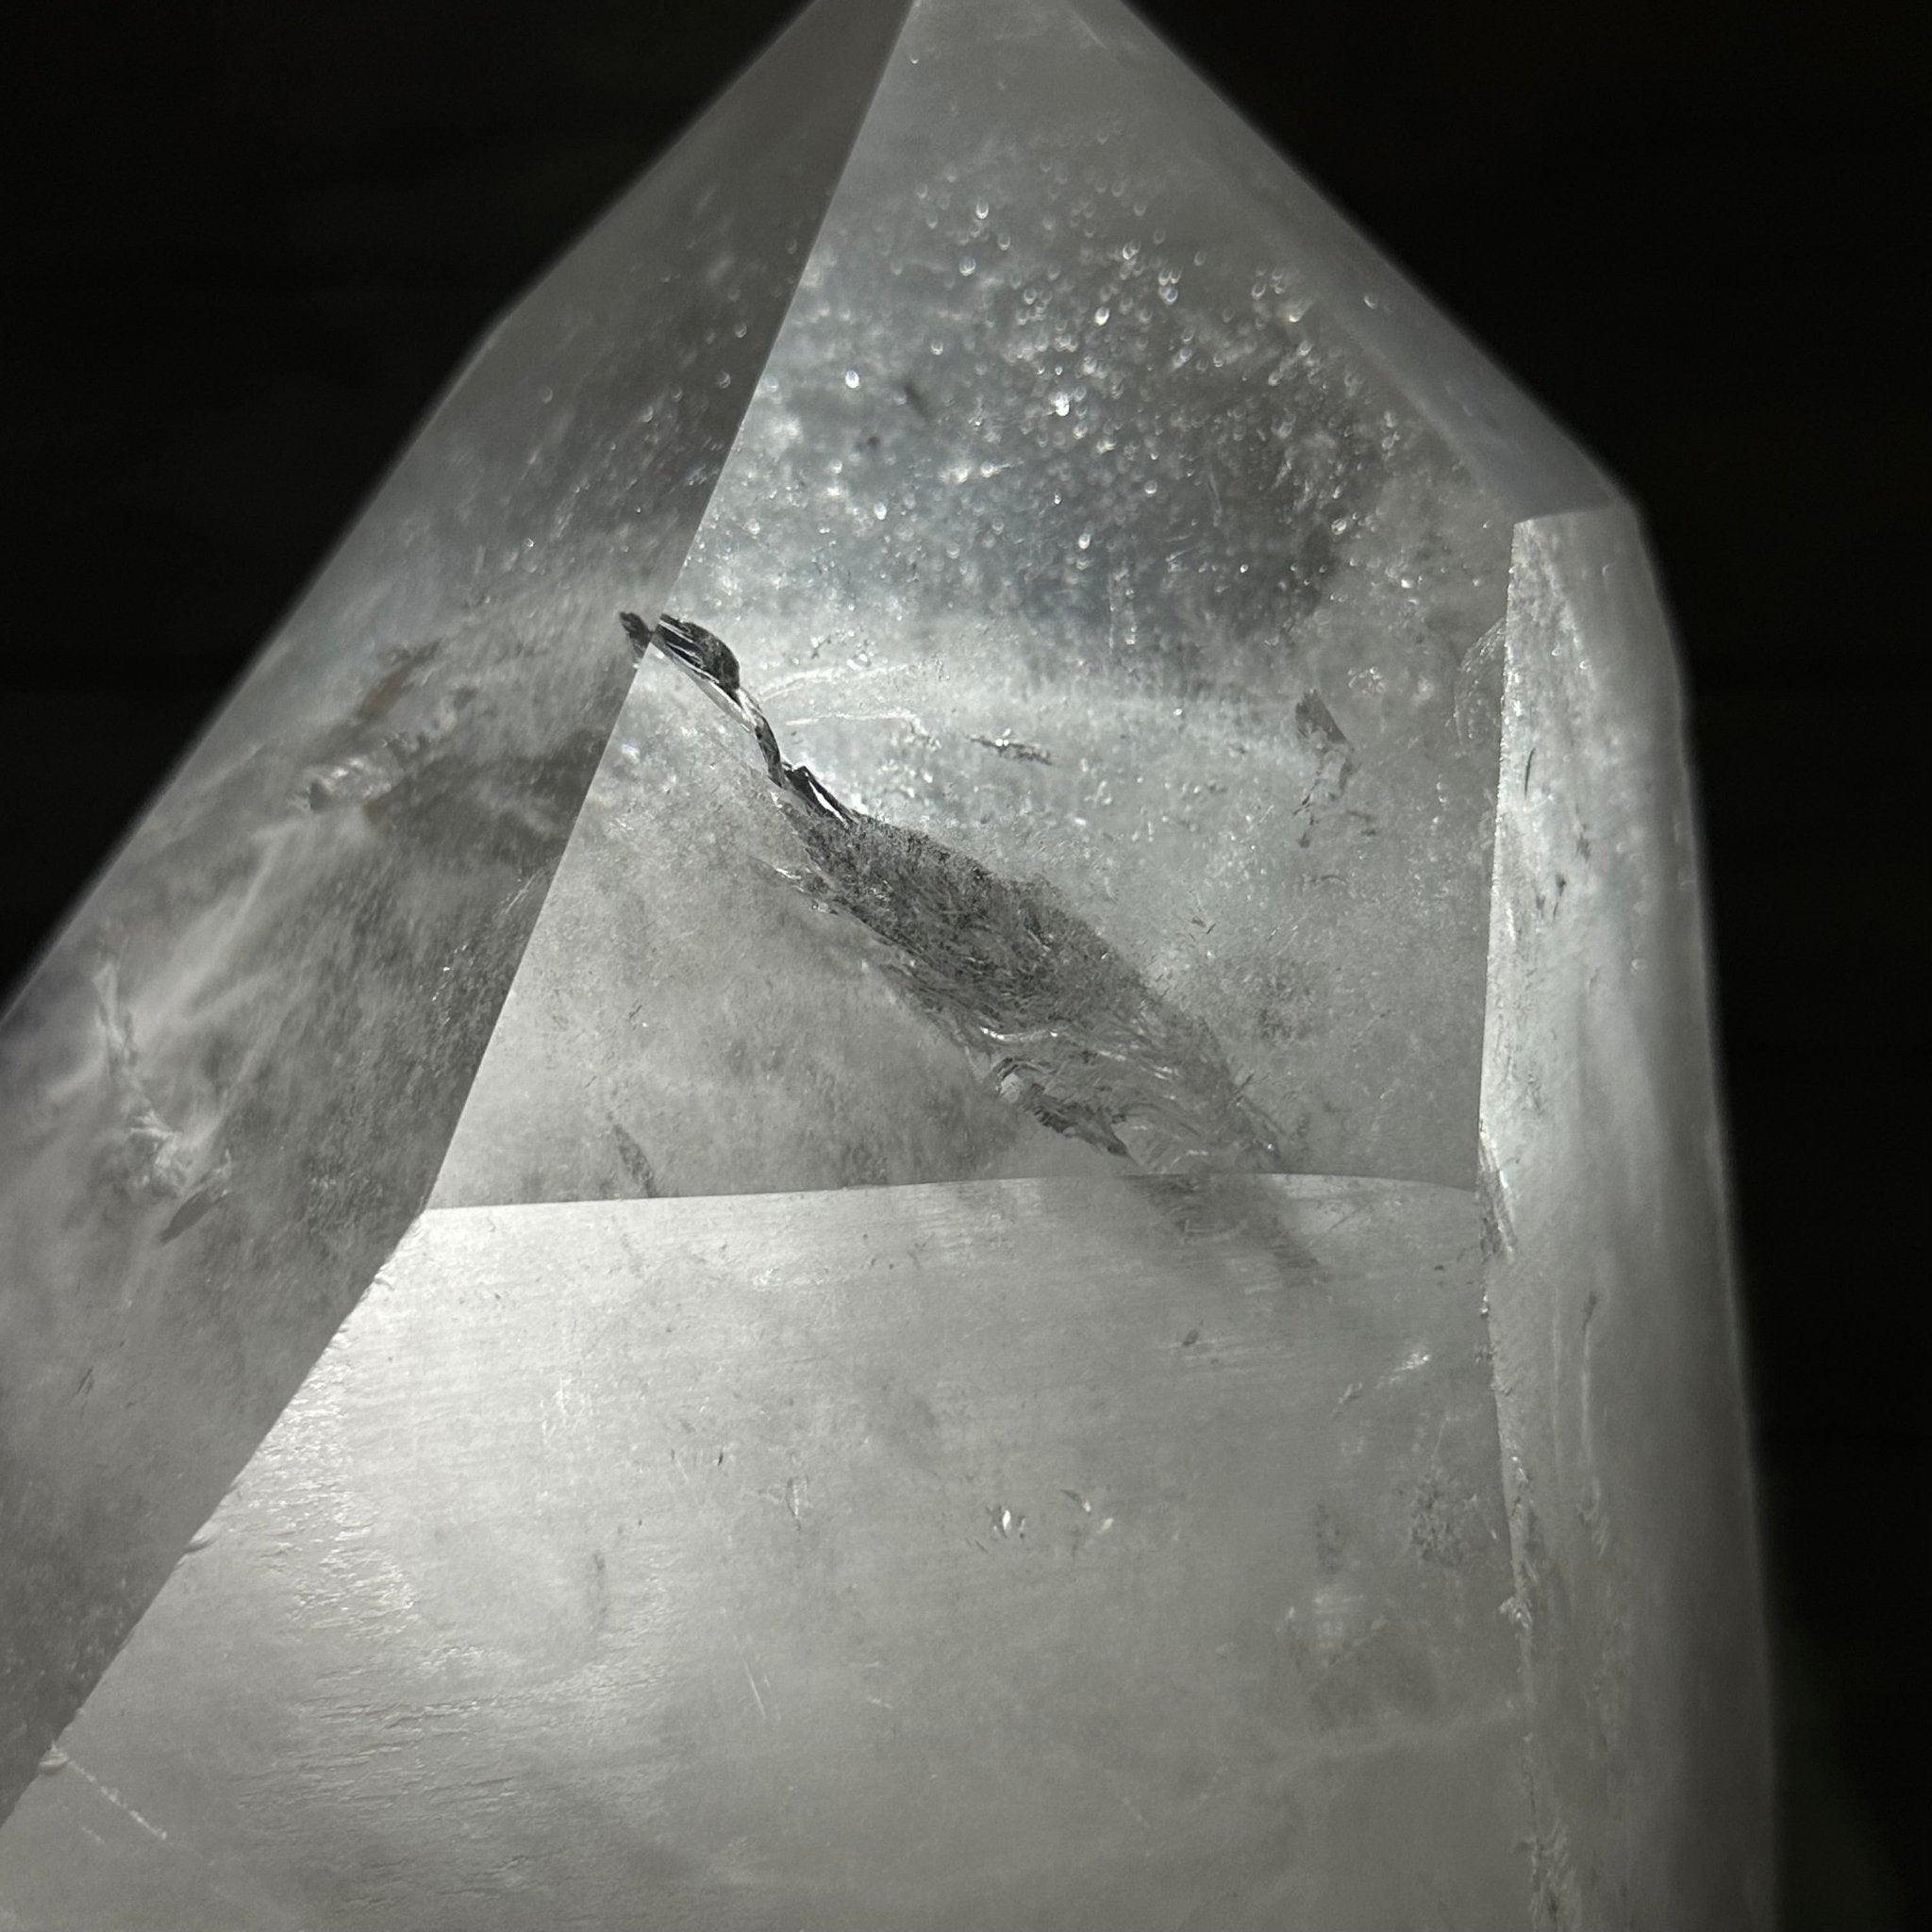 Clear Quartz Crystal Point on Rotating Base, 40.1 lbs & 18.4" Tall #3120CQ-008 - Brazil GemsBrazil GemsClear Quartz Crystal Point on Rotating Base, 40.1 lbs & 18.4" Tall #3120CQ-008Crystal Points3120CQ-008